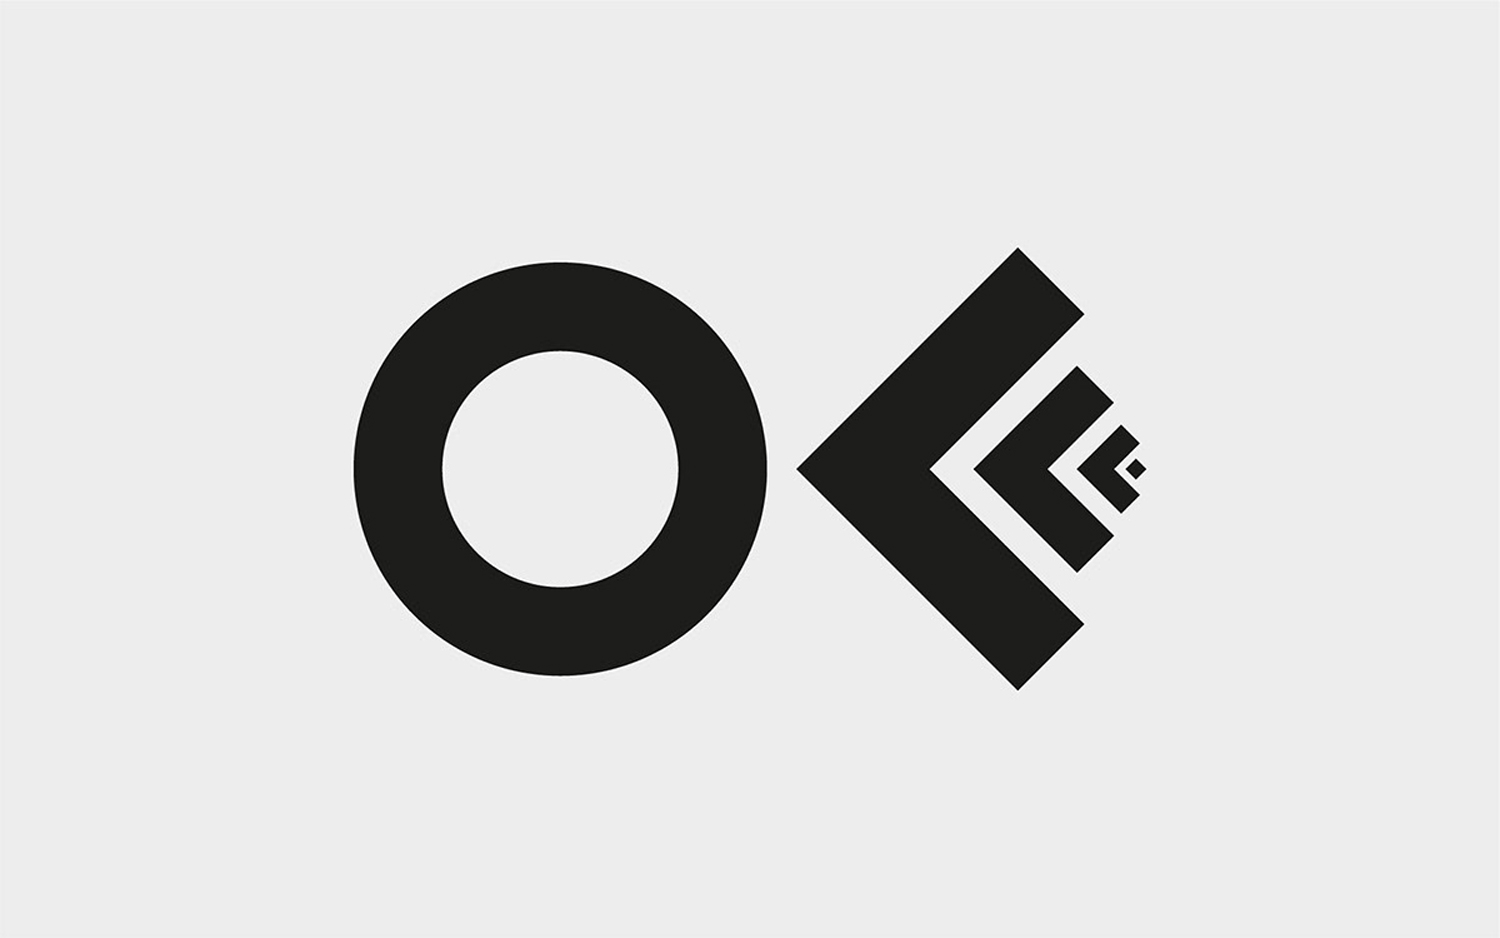 OFFF logo 2013